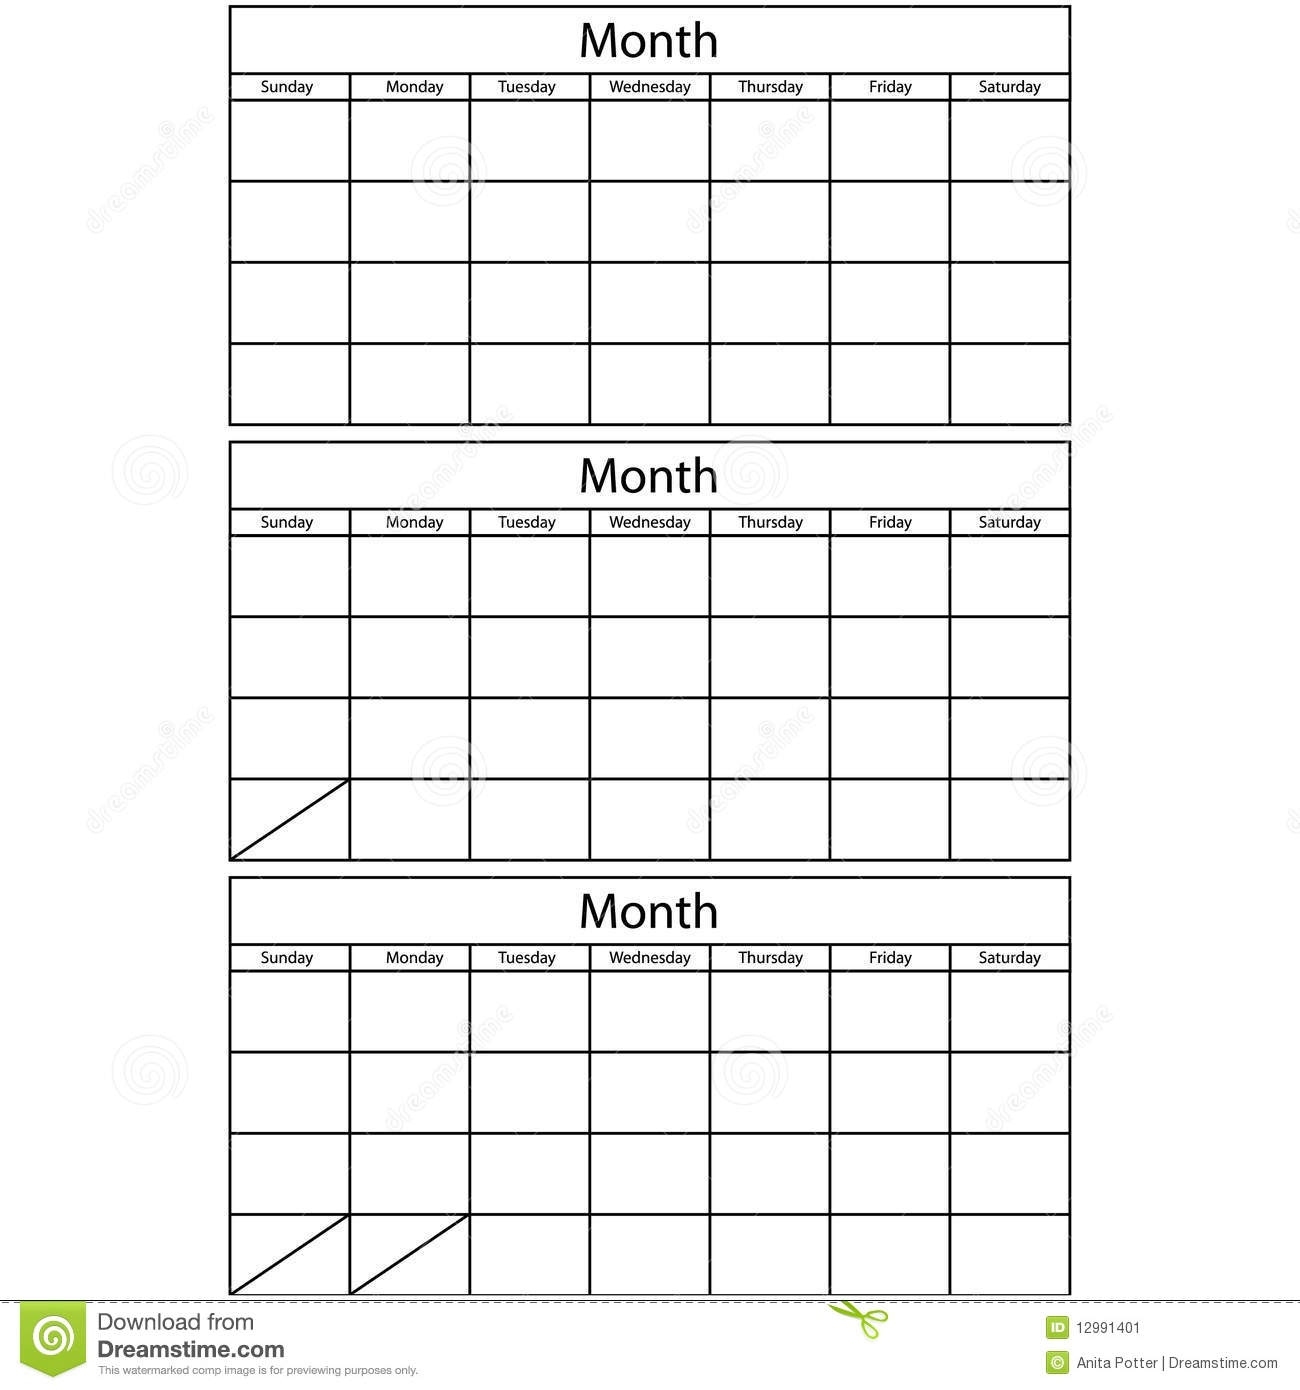 Blank Calendar 3 Templates Stock Vector. Illustration Of Month Calendar Template 3 Months